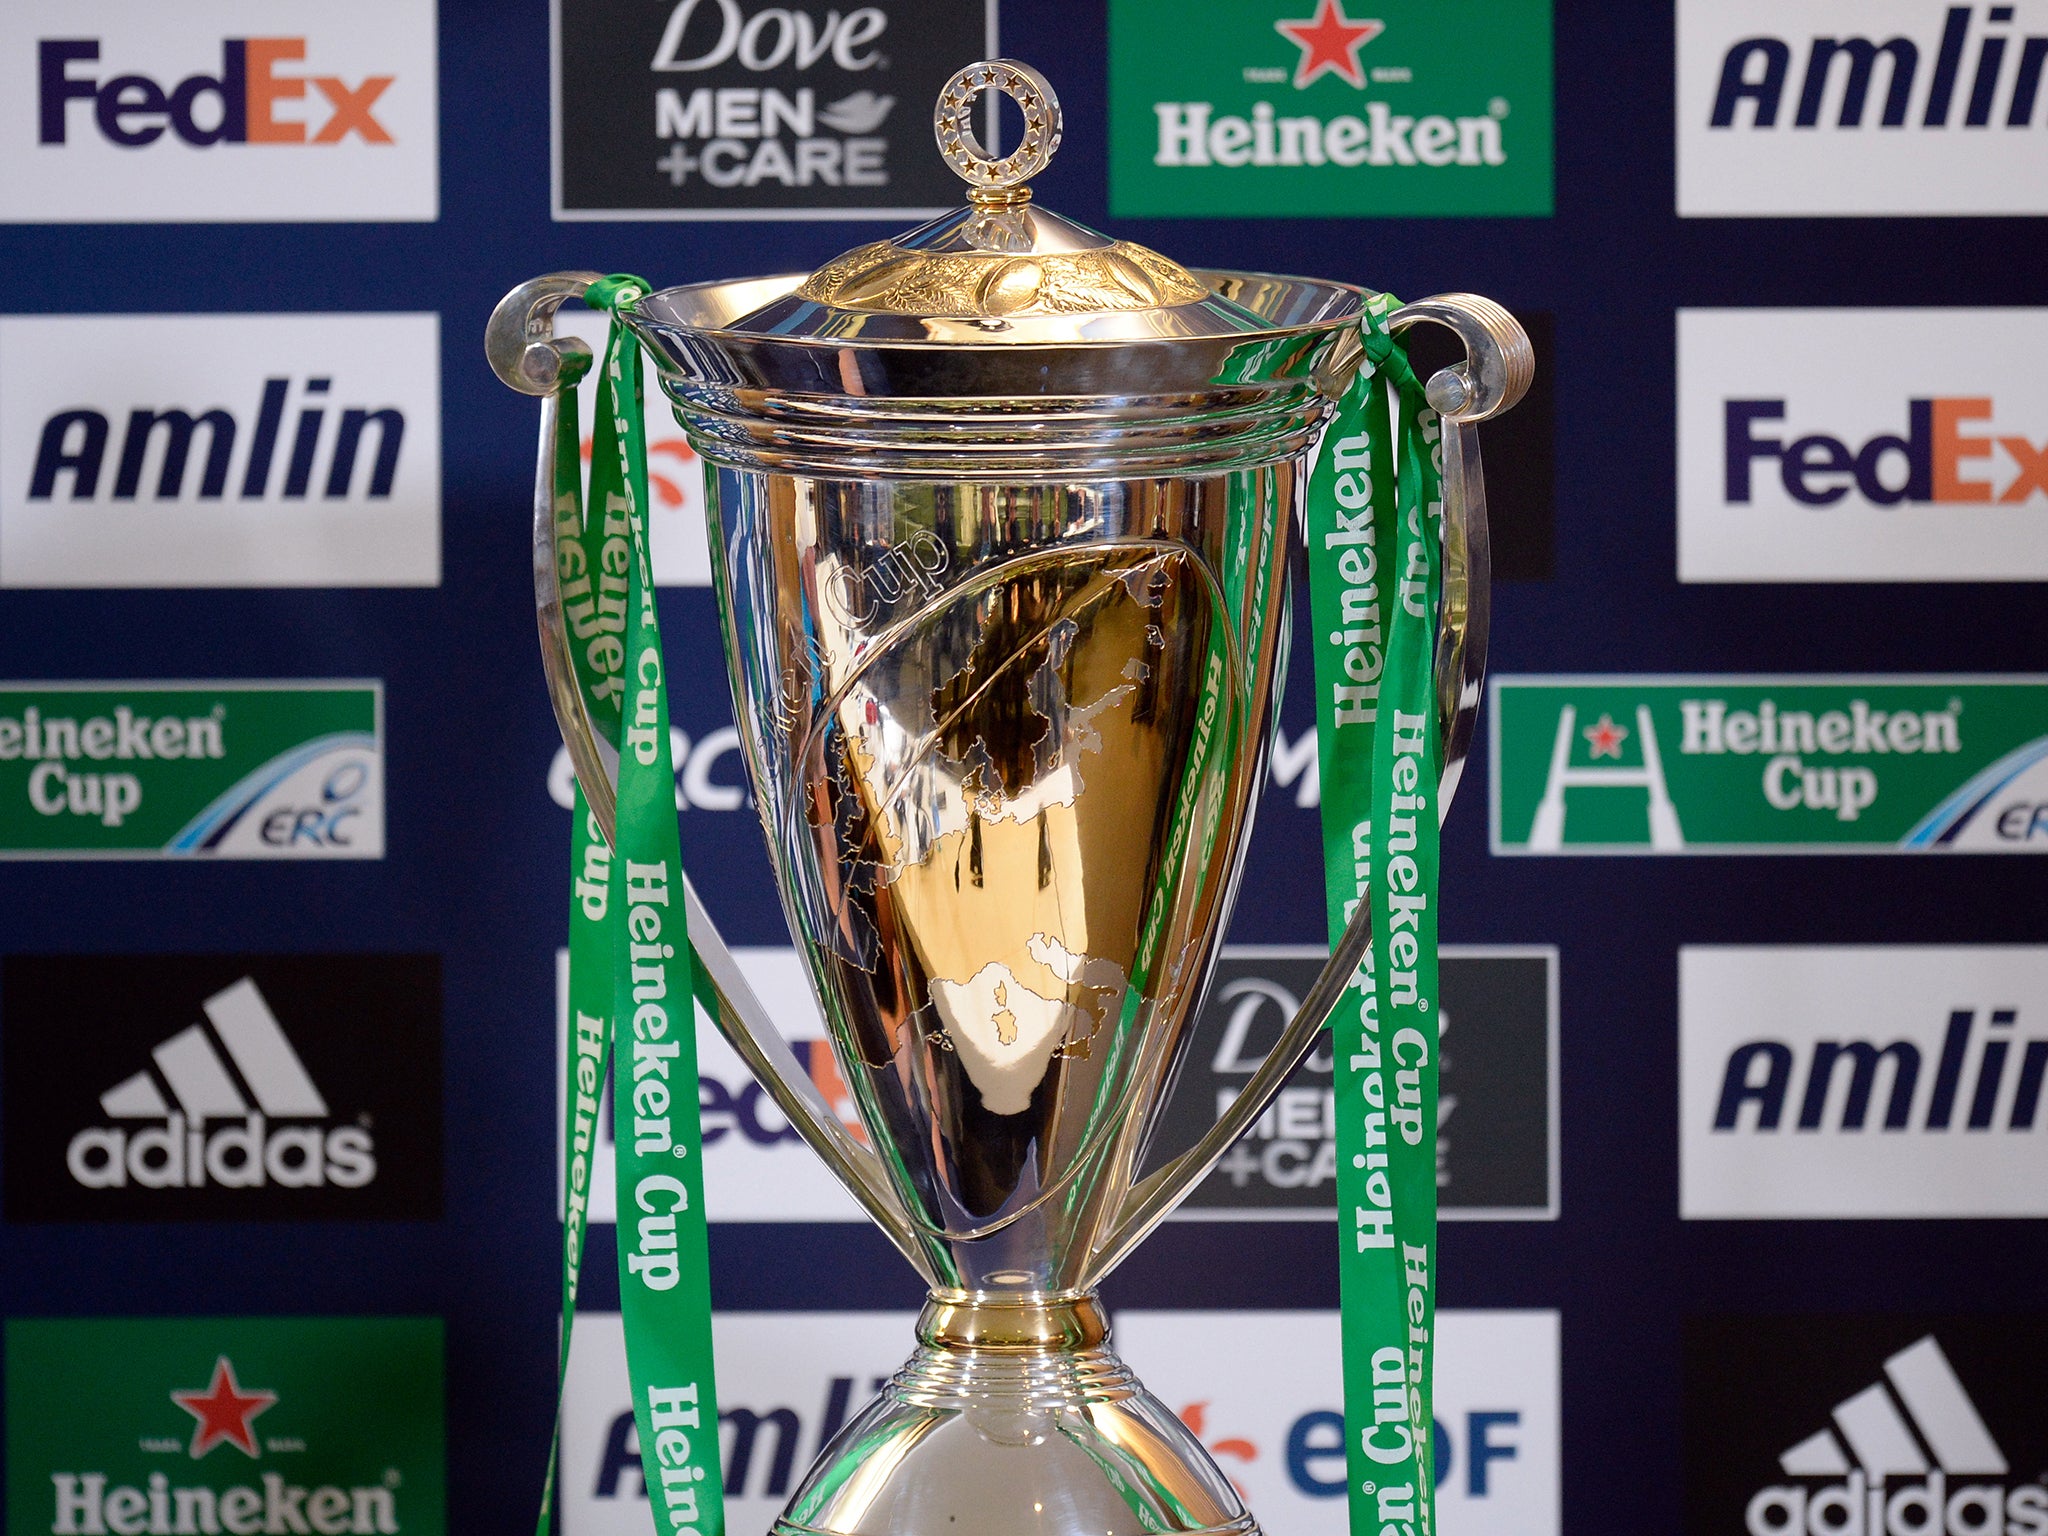 Rugby Union's European Cup trophy sponsored by Heineken